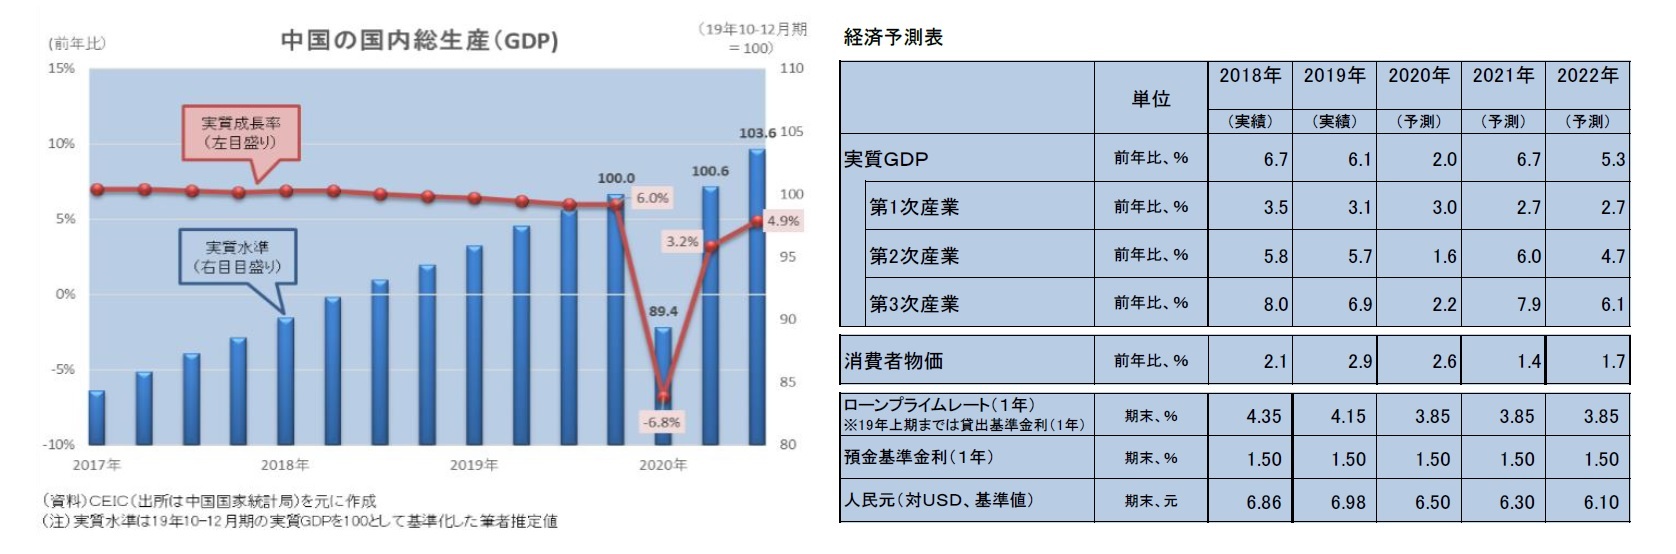 中国の国内総生産(GDP)/経済予測表